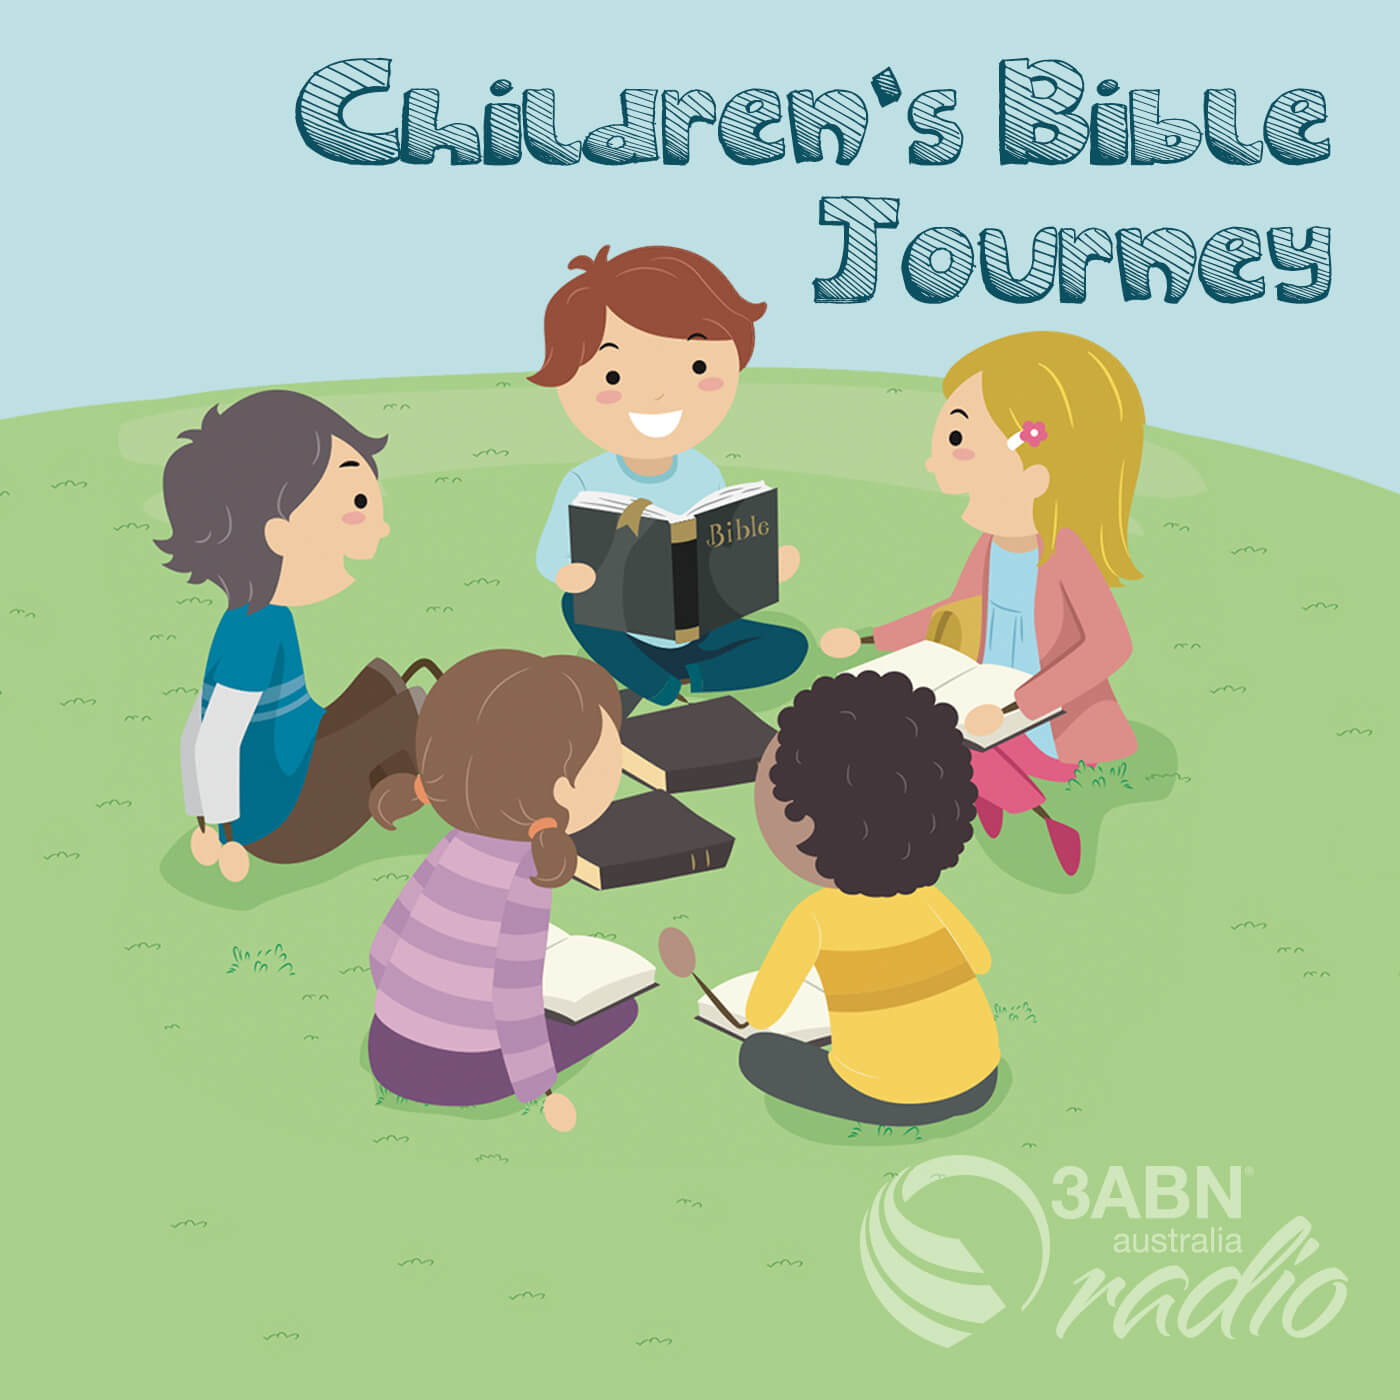 Children's Bible Journey - 2124